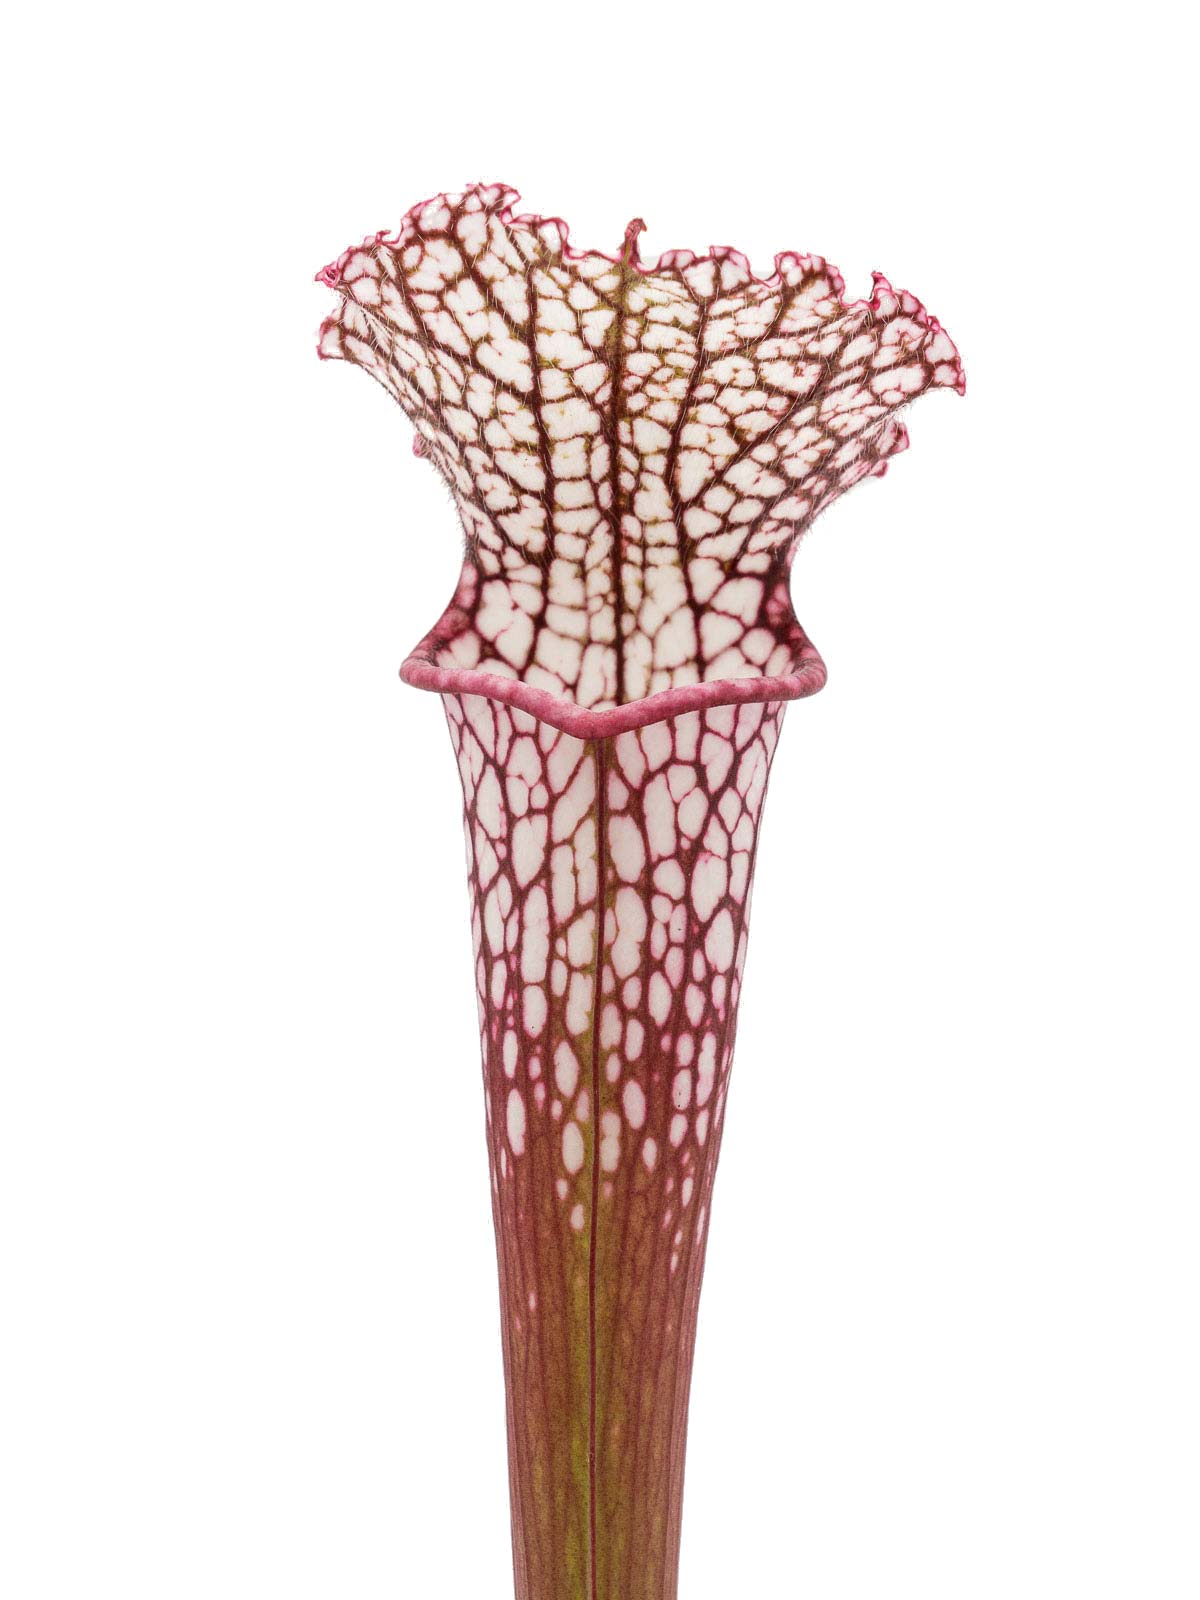 Sarracenia leucophylla - 5ee13, red form, Dr. Eberhard König